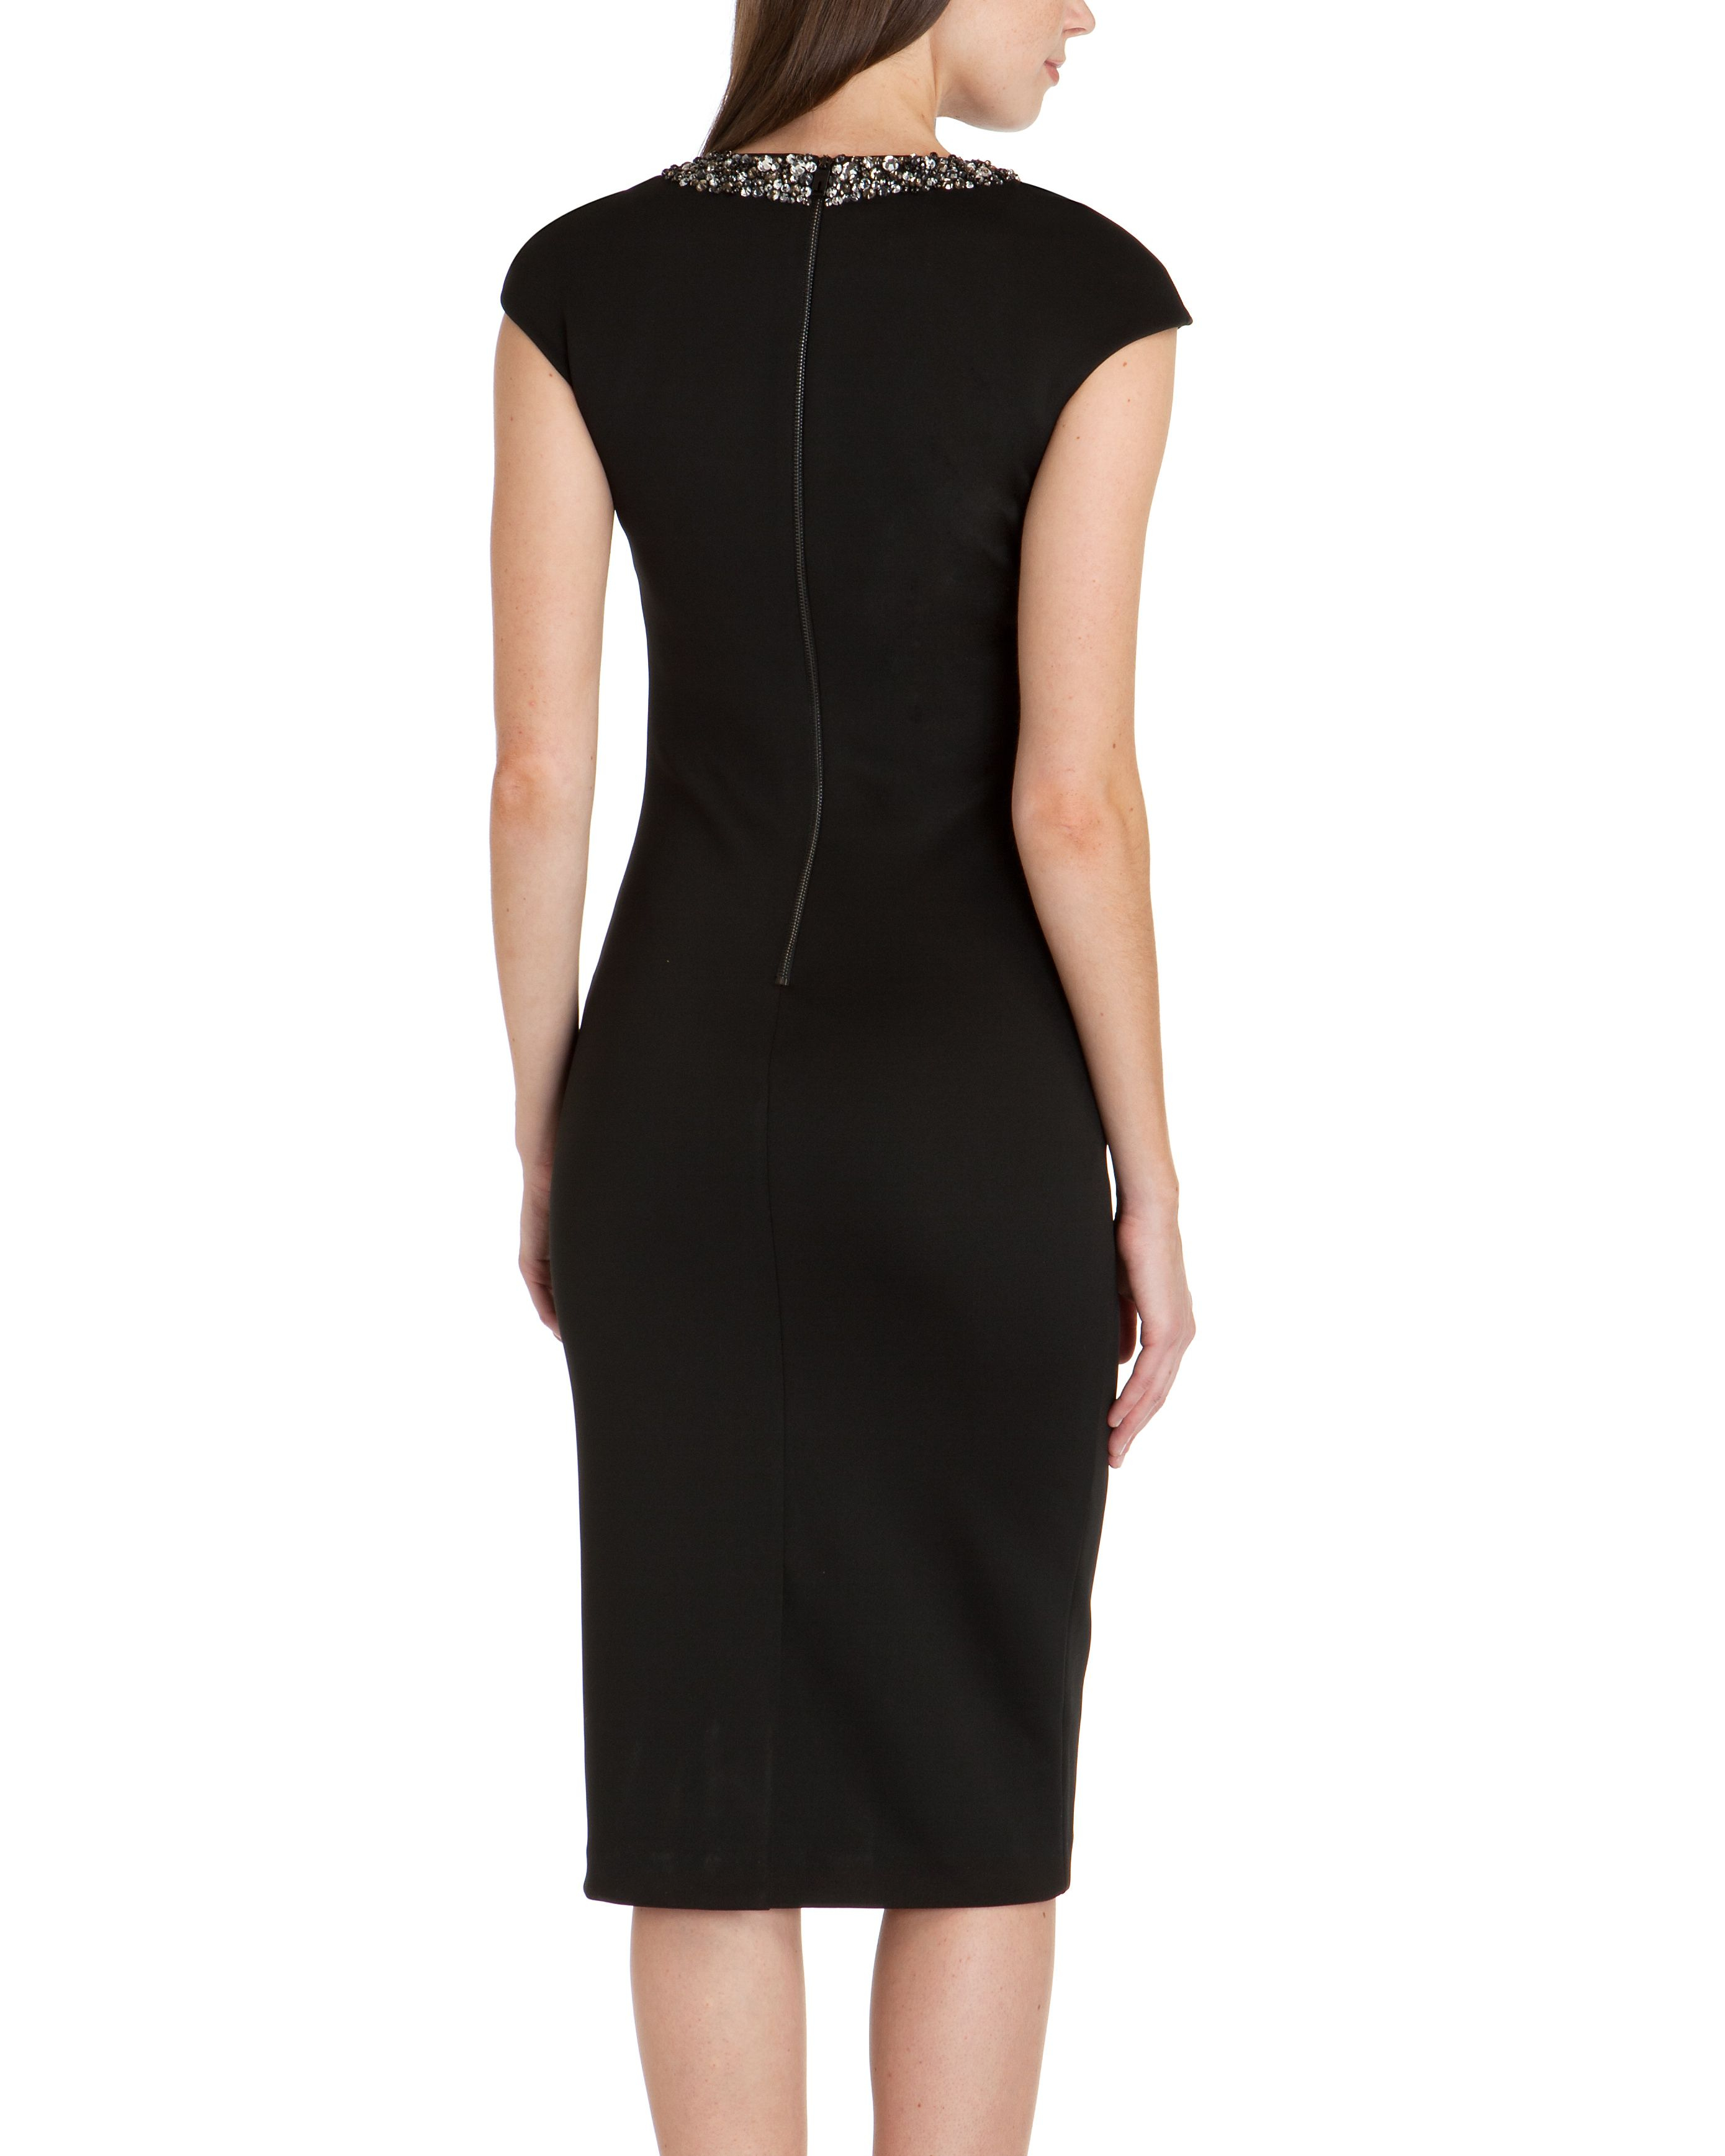 Ted baker Elenna Embellished Midi Dress in Black | Lyst